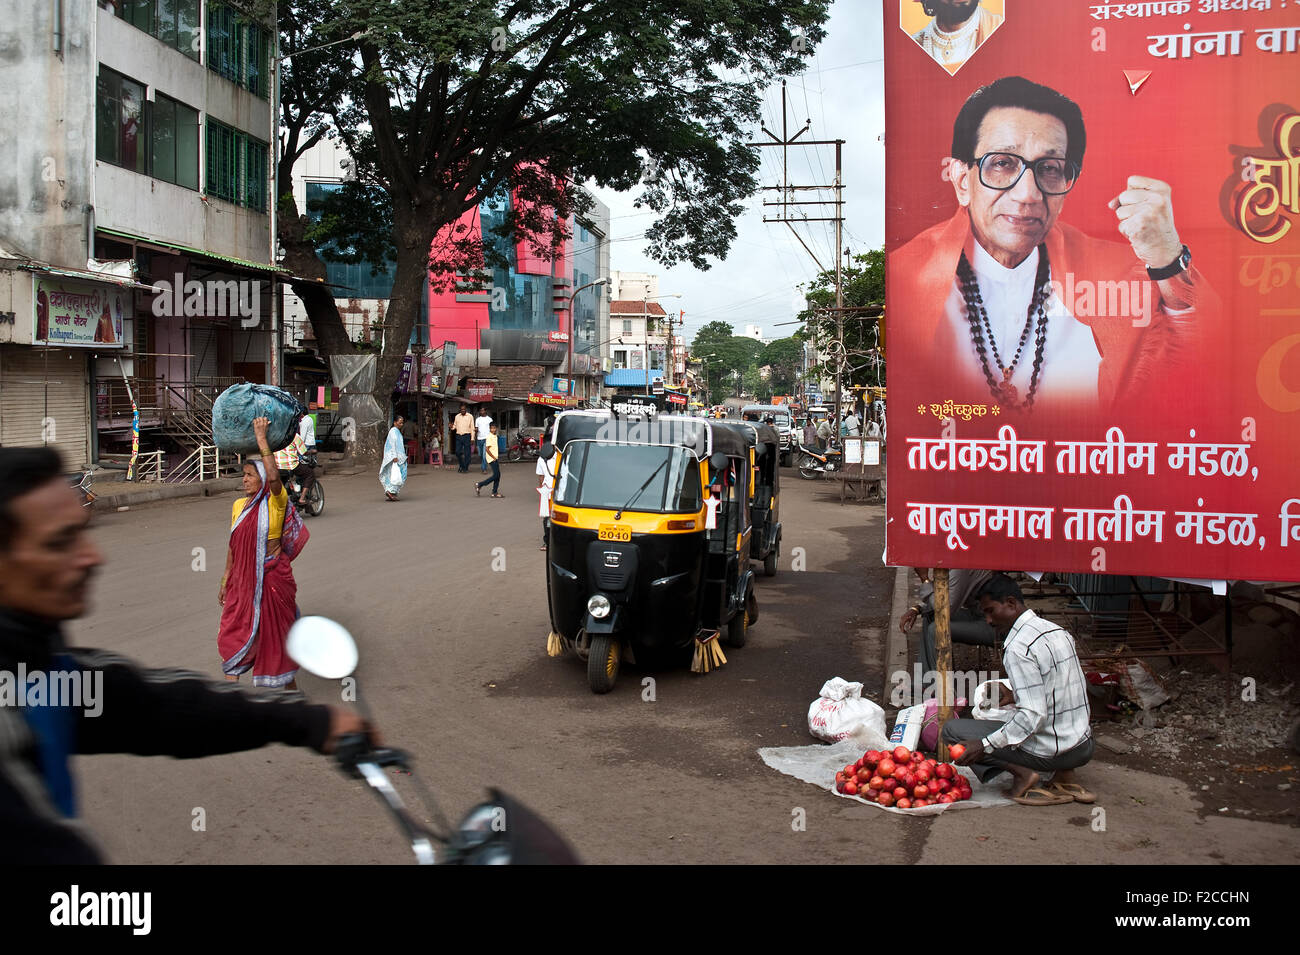 Billboard advertising a hindu nationalist party, the Shiv Sena ( India) Stock Photo